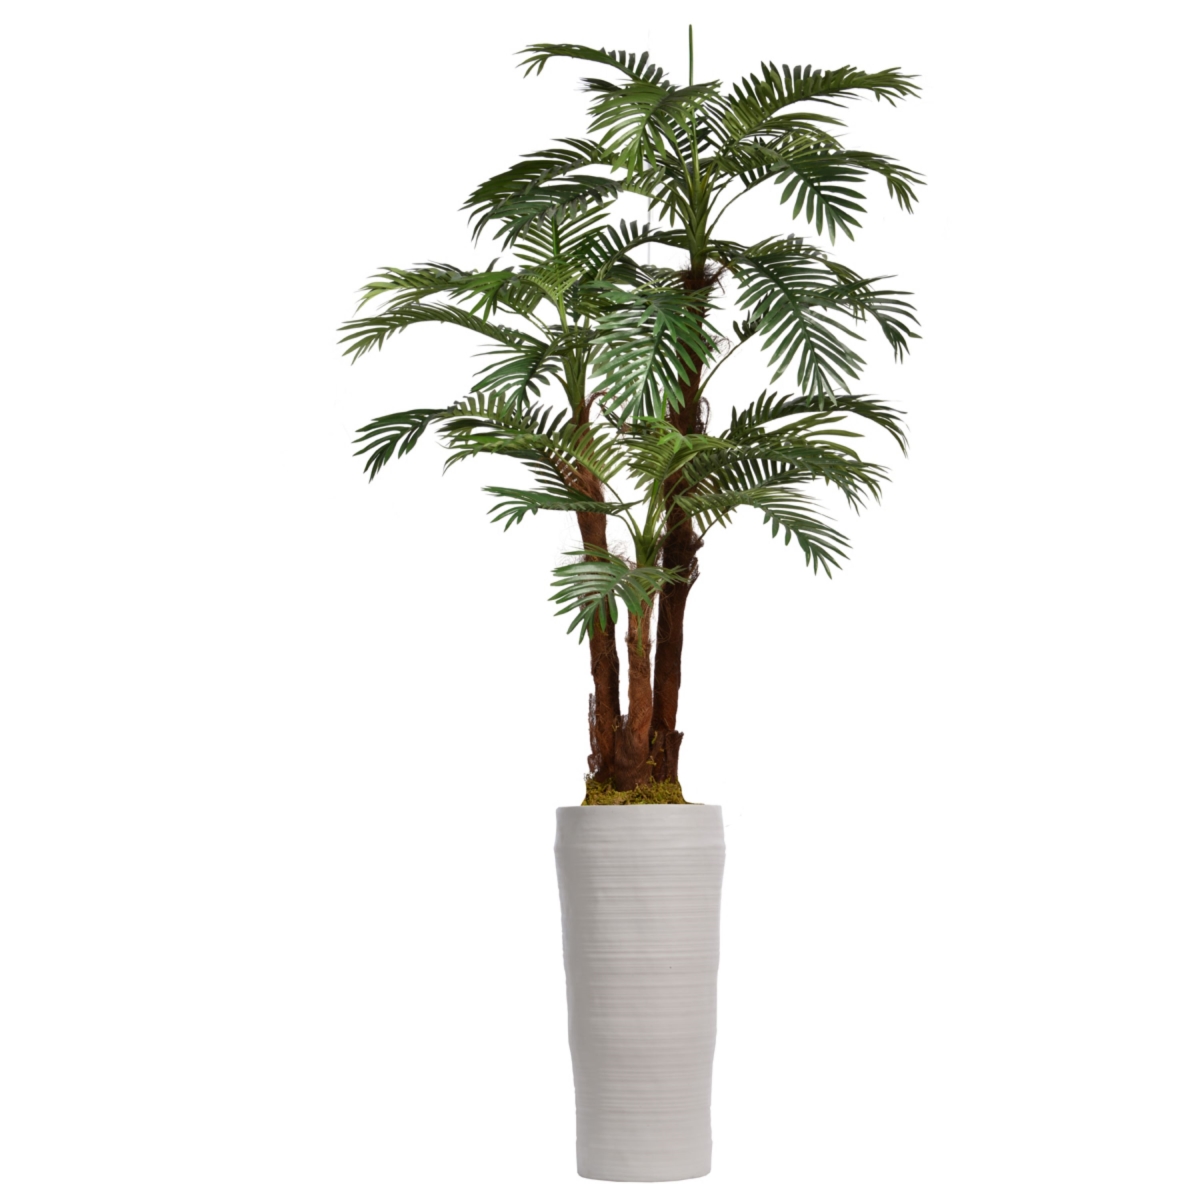 Vhx135218 87 In. Tall Palm Tree With Burlap Kit & Fiberstone Planter